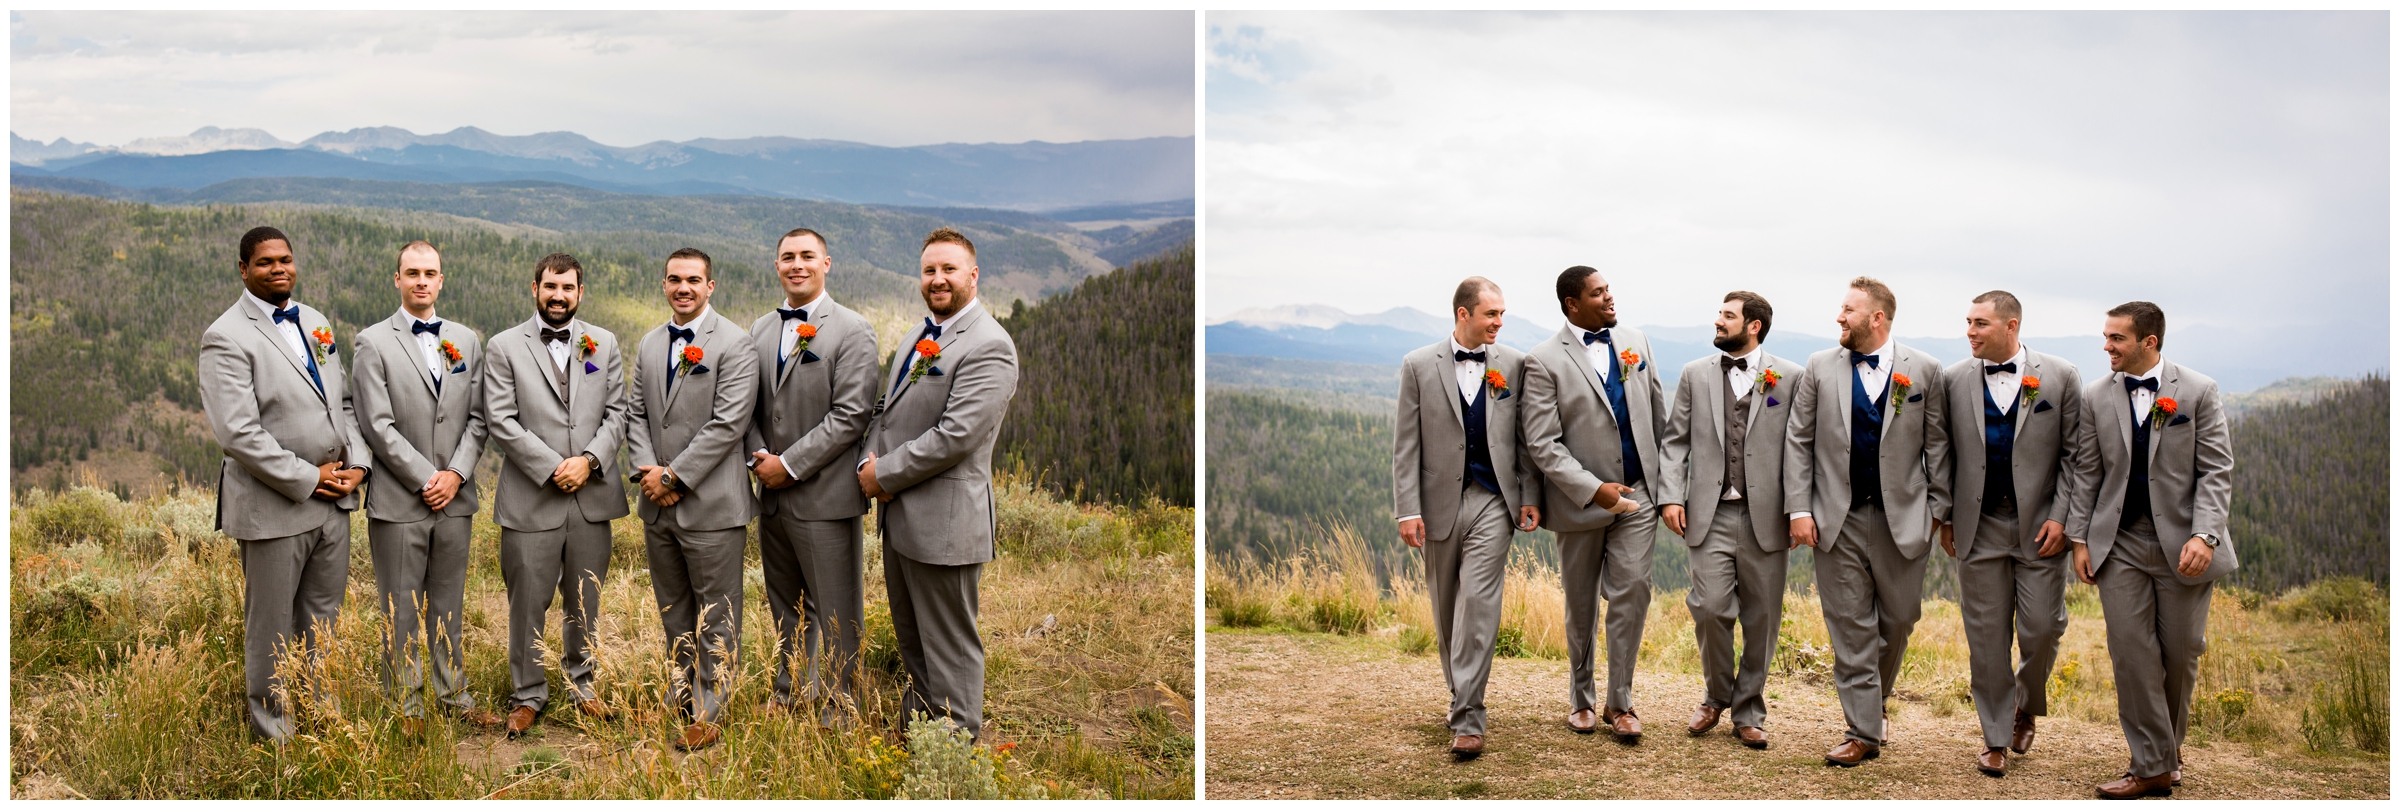 groomsmen walking during Granby Colorado wedding photos 